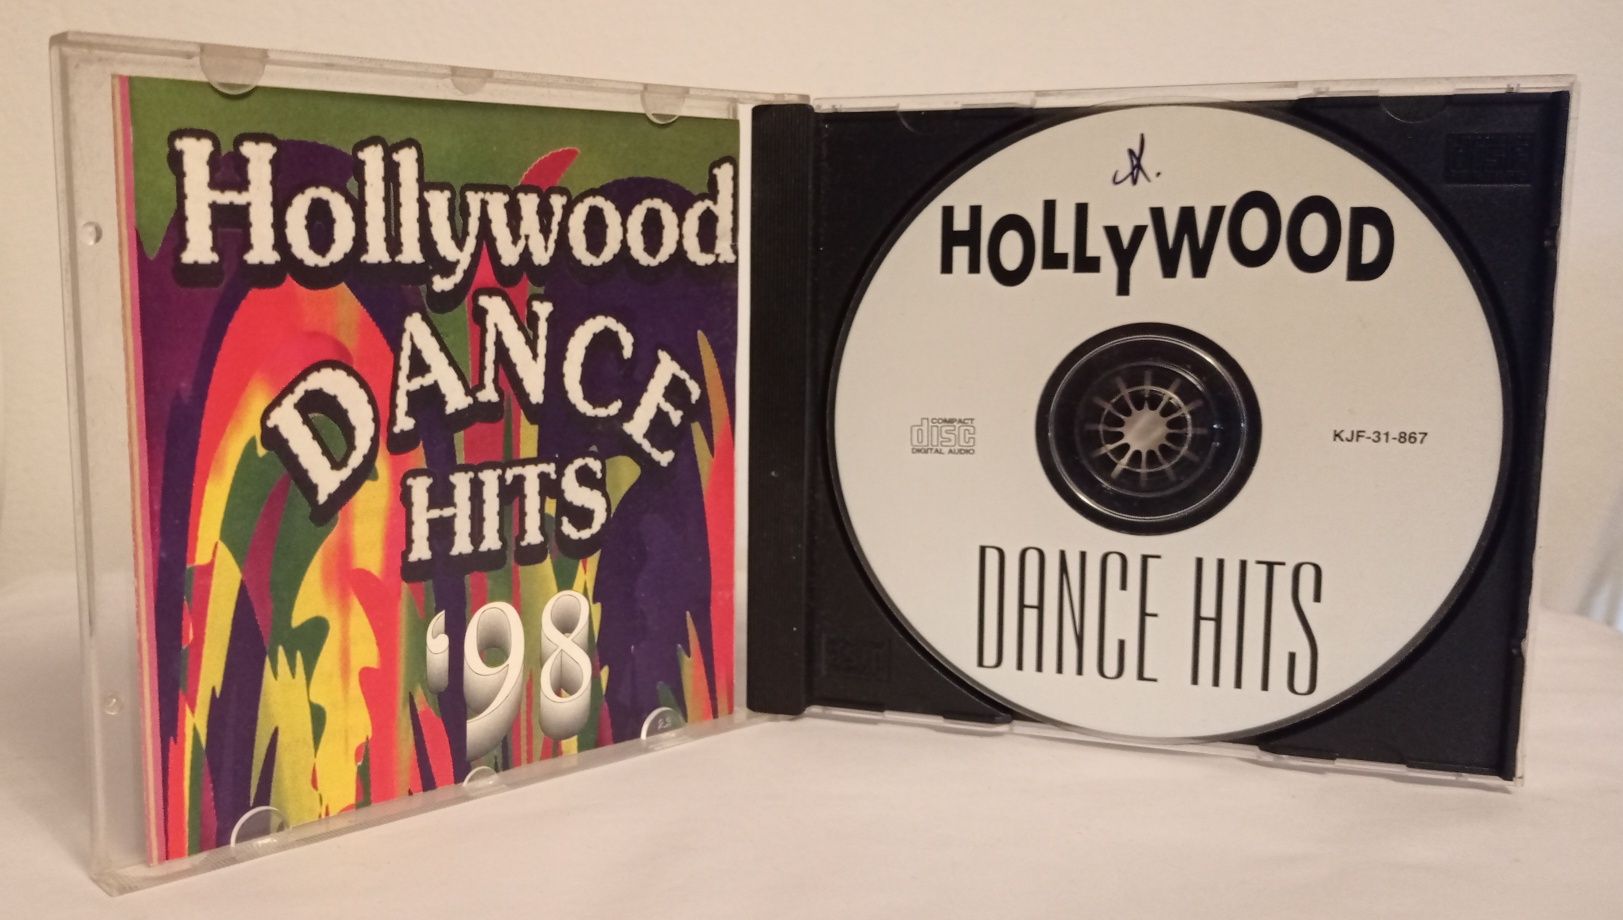 Cd audio Hollywood Dance Hits